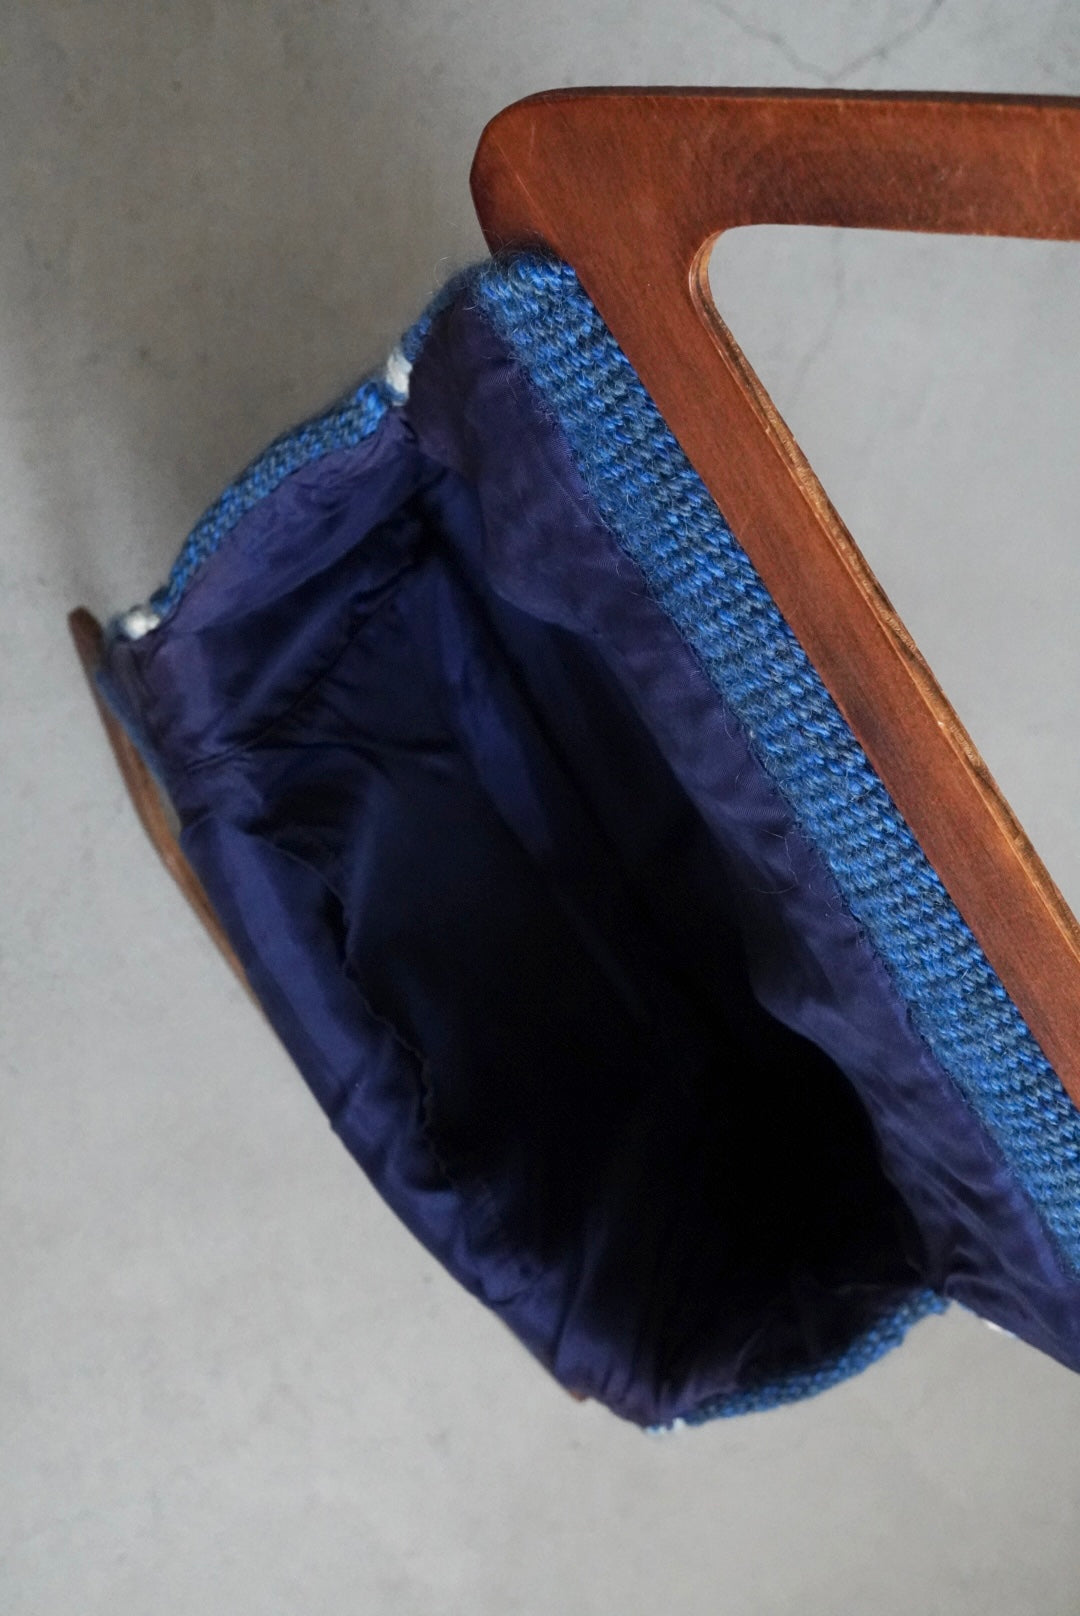 Weaving Bag